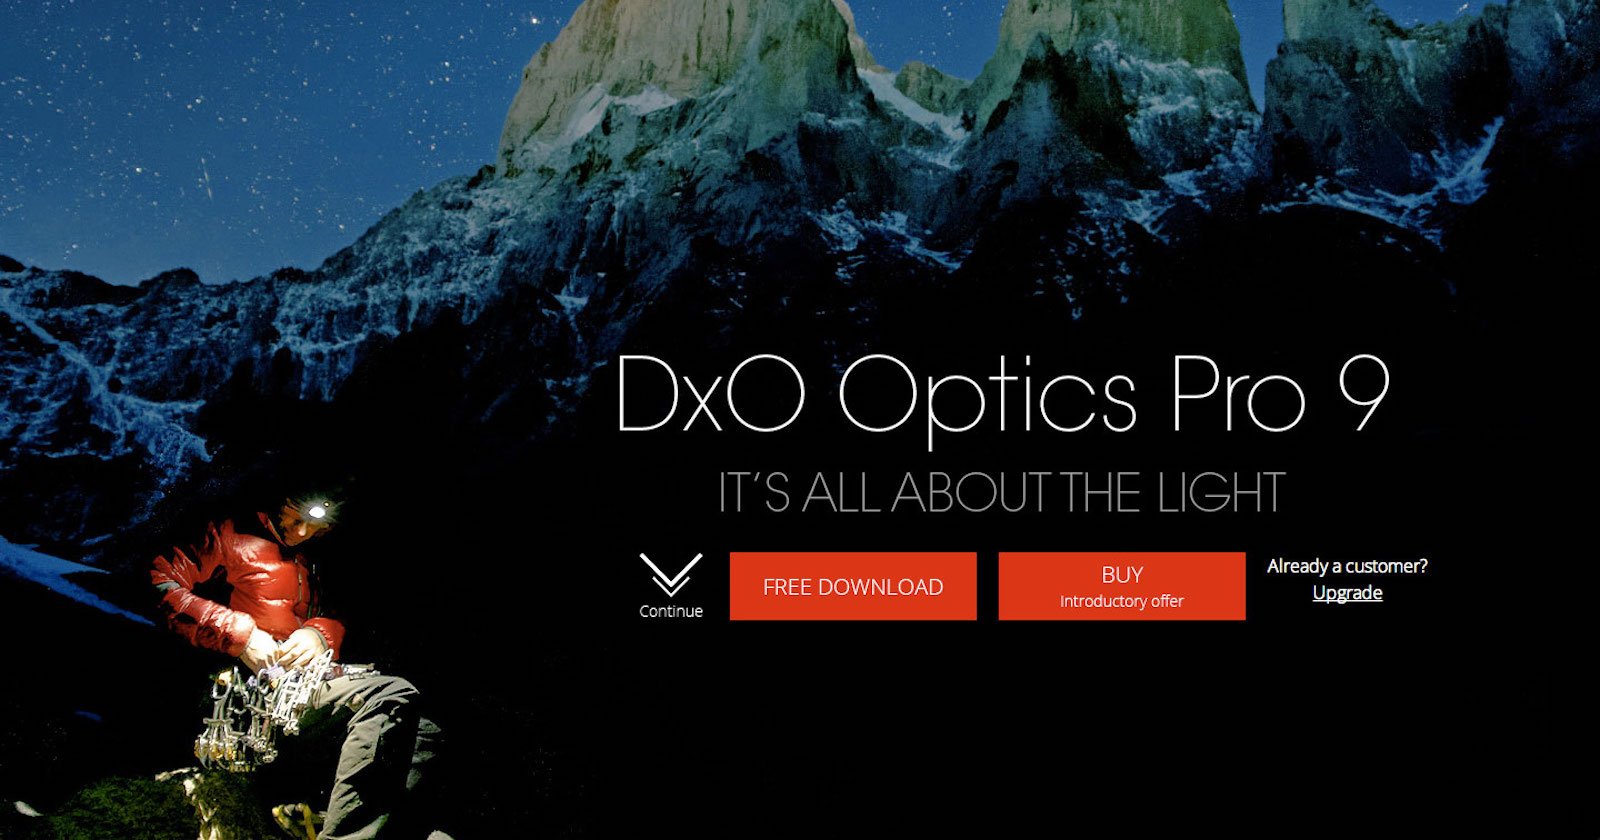 capture one pro 7 vs dxo optics pro 9